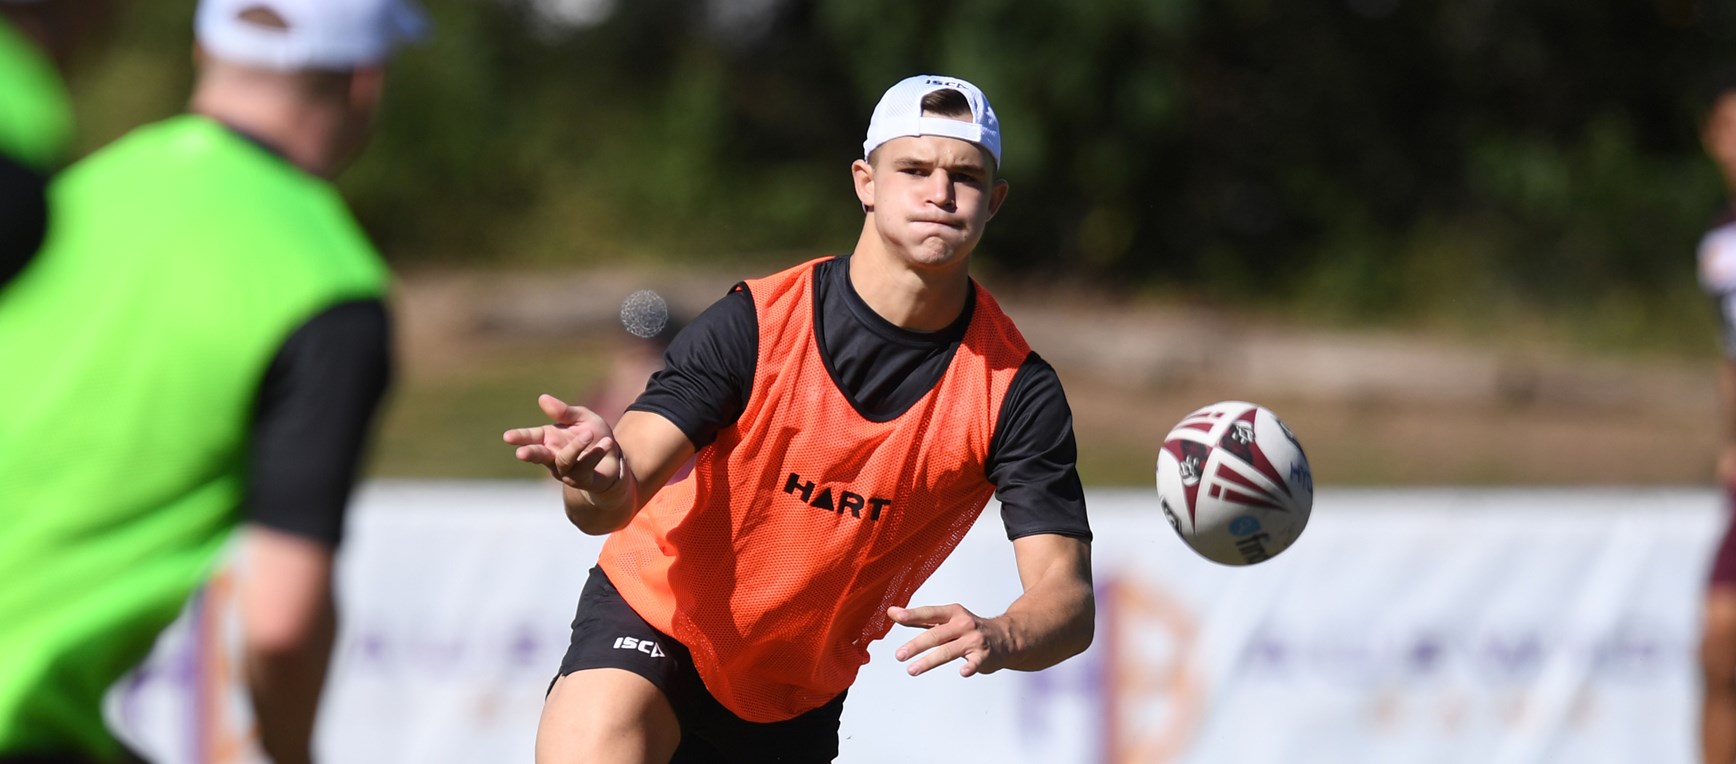 In pictures: Queensland Under 18 team training